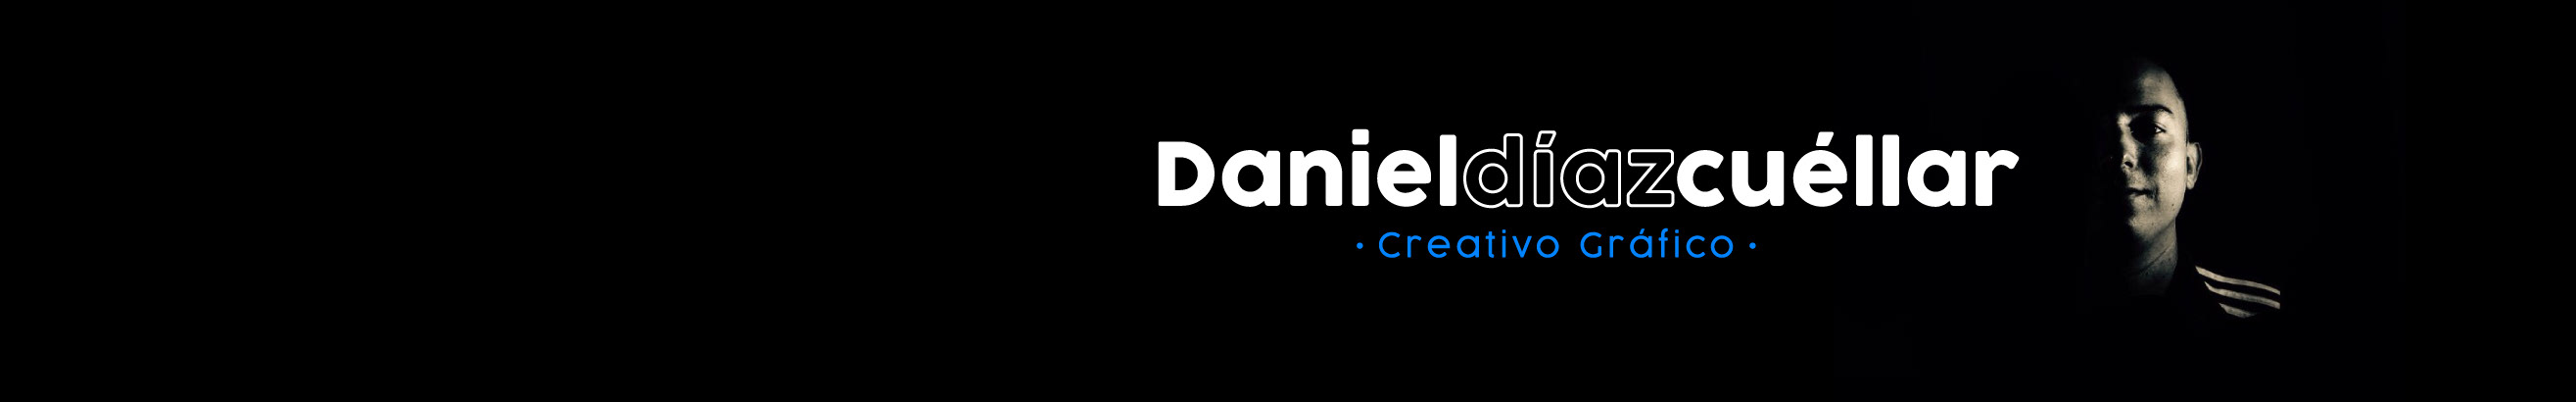 Daniel Diaz Cuellar 🇨🇴's profile banner